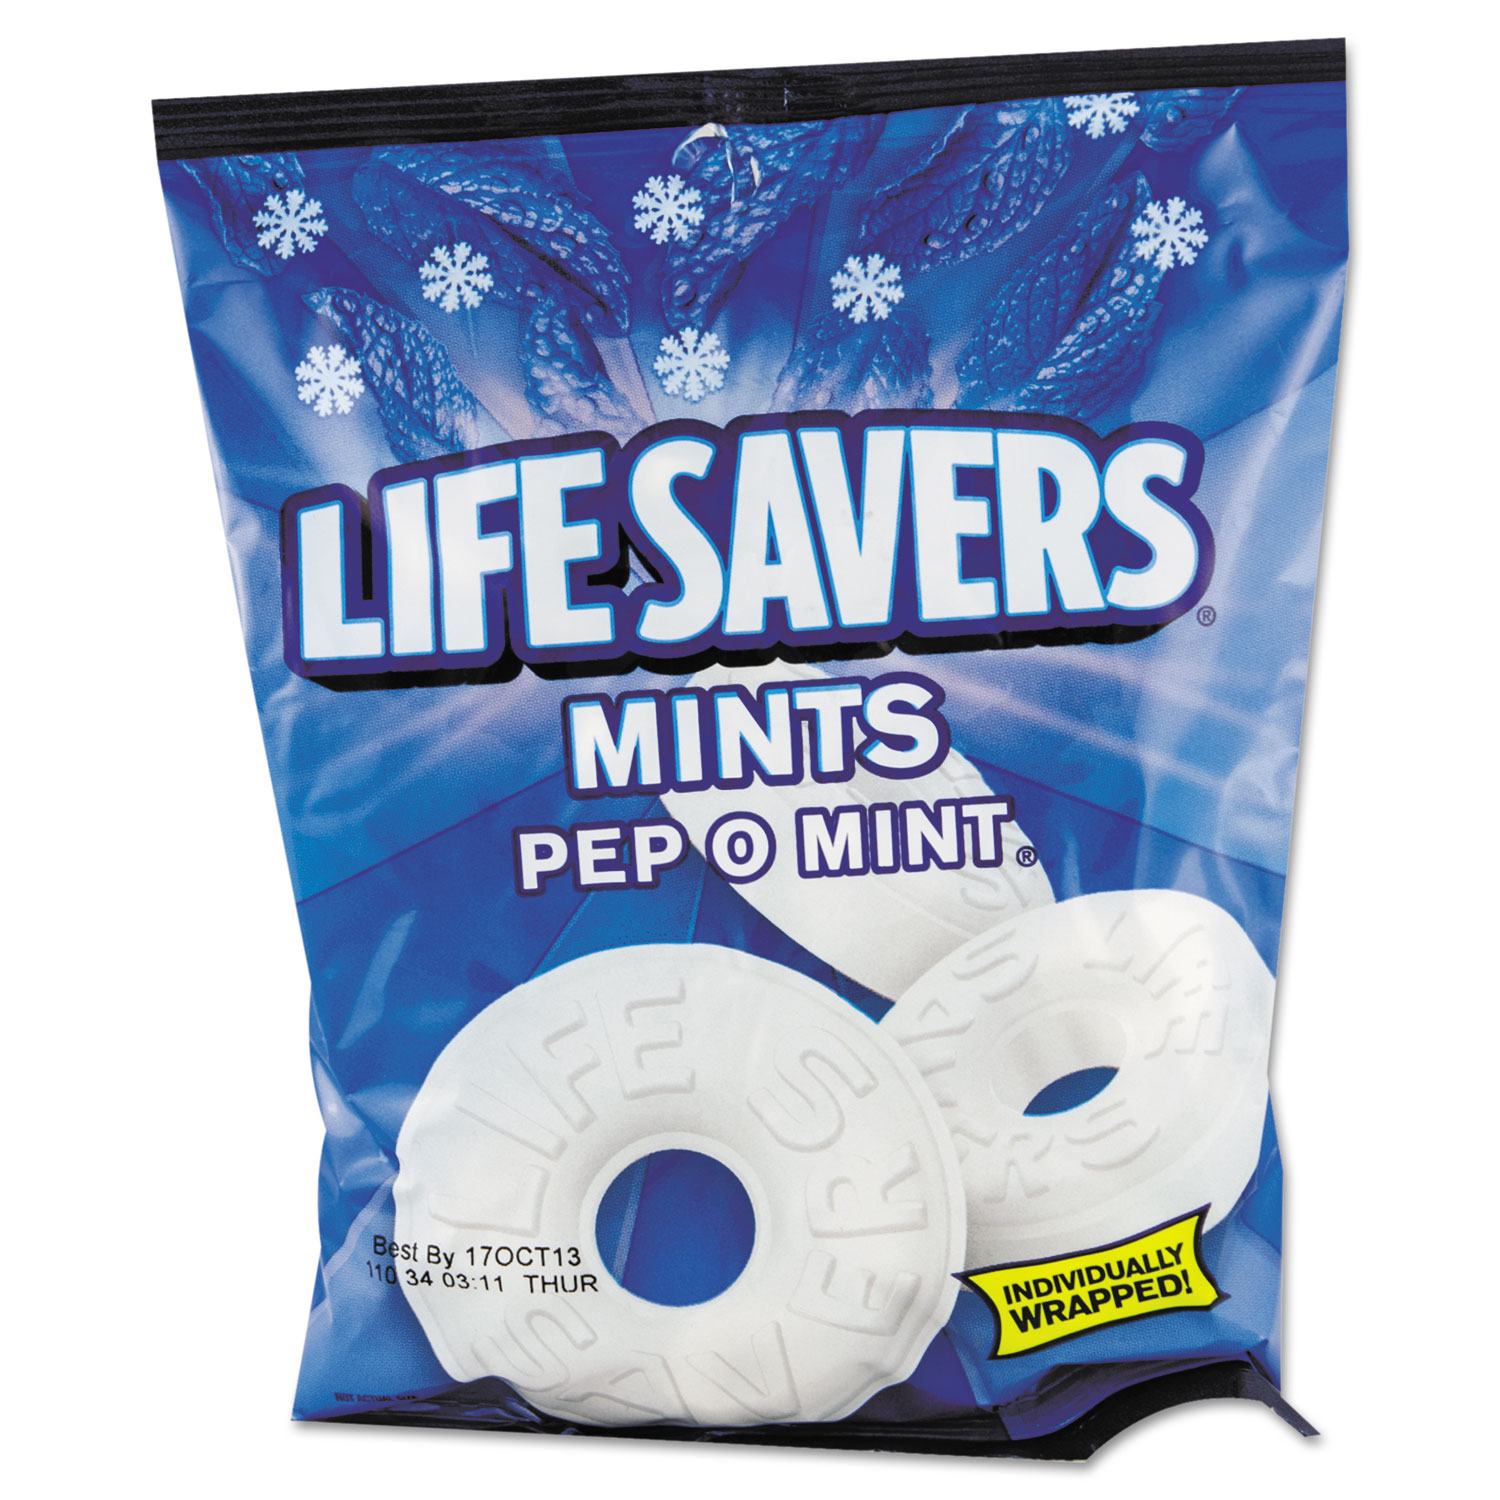  LifeSavers NFG08503 Hard Candy Mints, Pep-O-Mint, Individually Wrapped, 6.25oz Bag (LFS88503) 